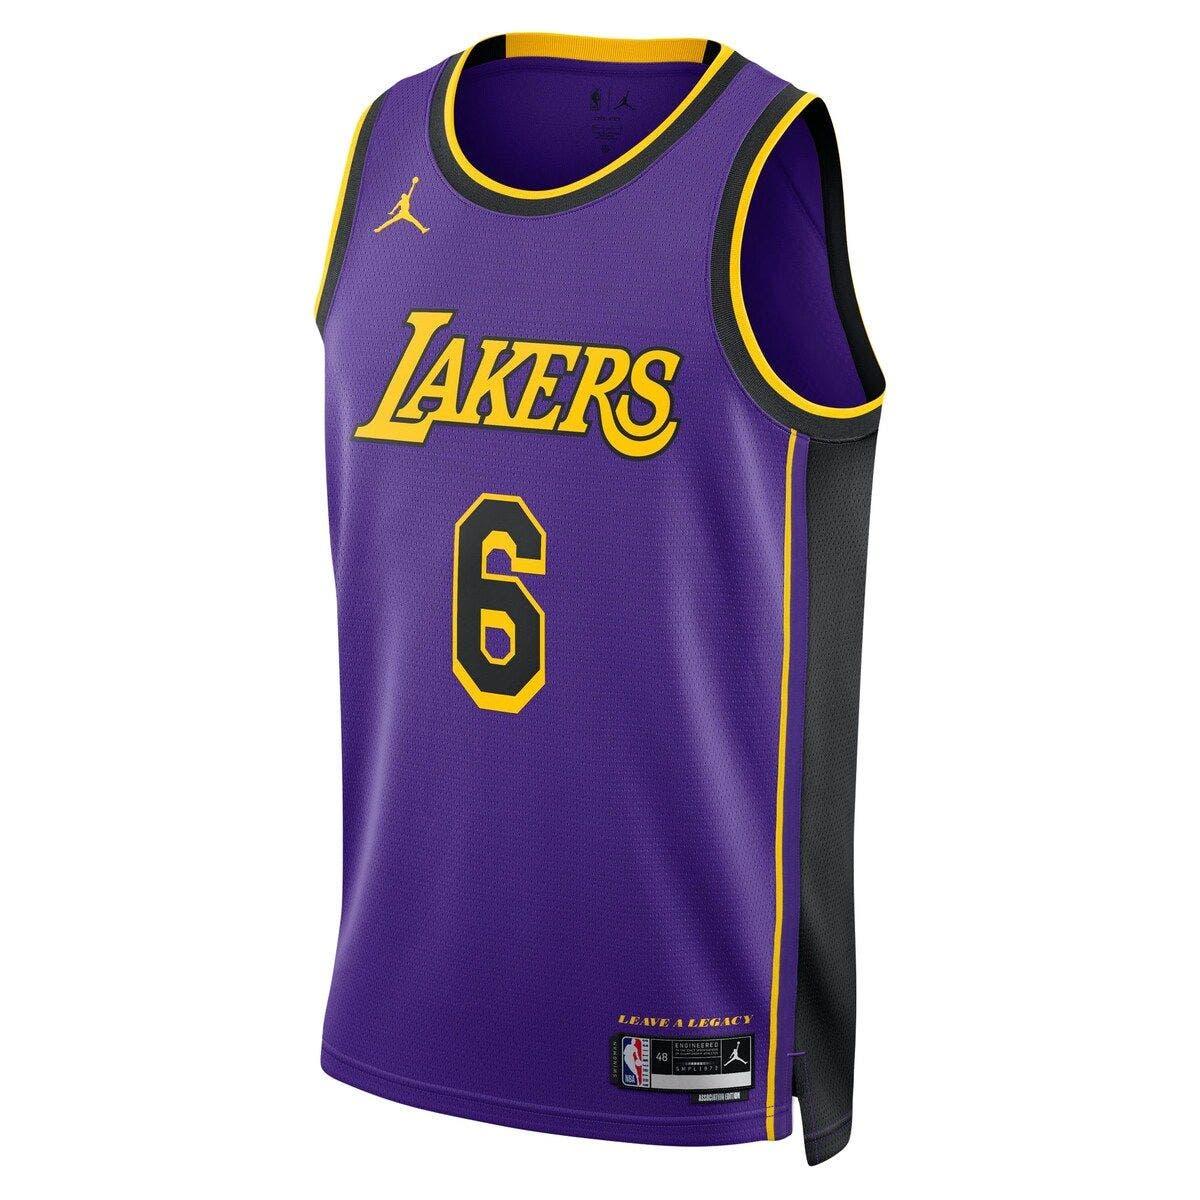 Unisex Nike LeBron James White Los Angeles Lakers Swingman Jersey - Association Edition Size: Small